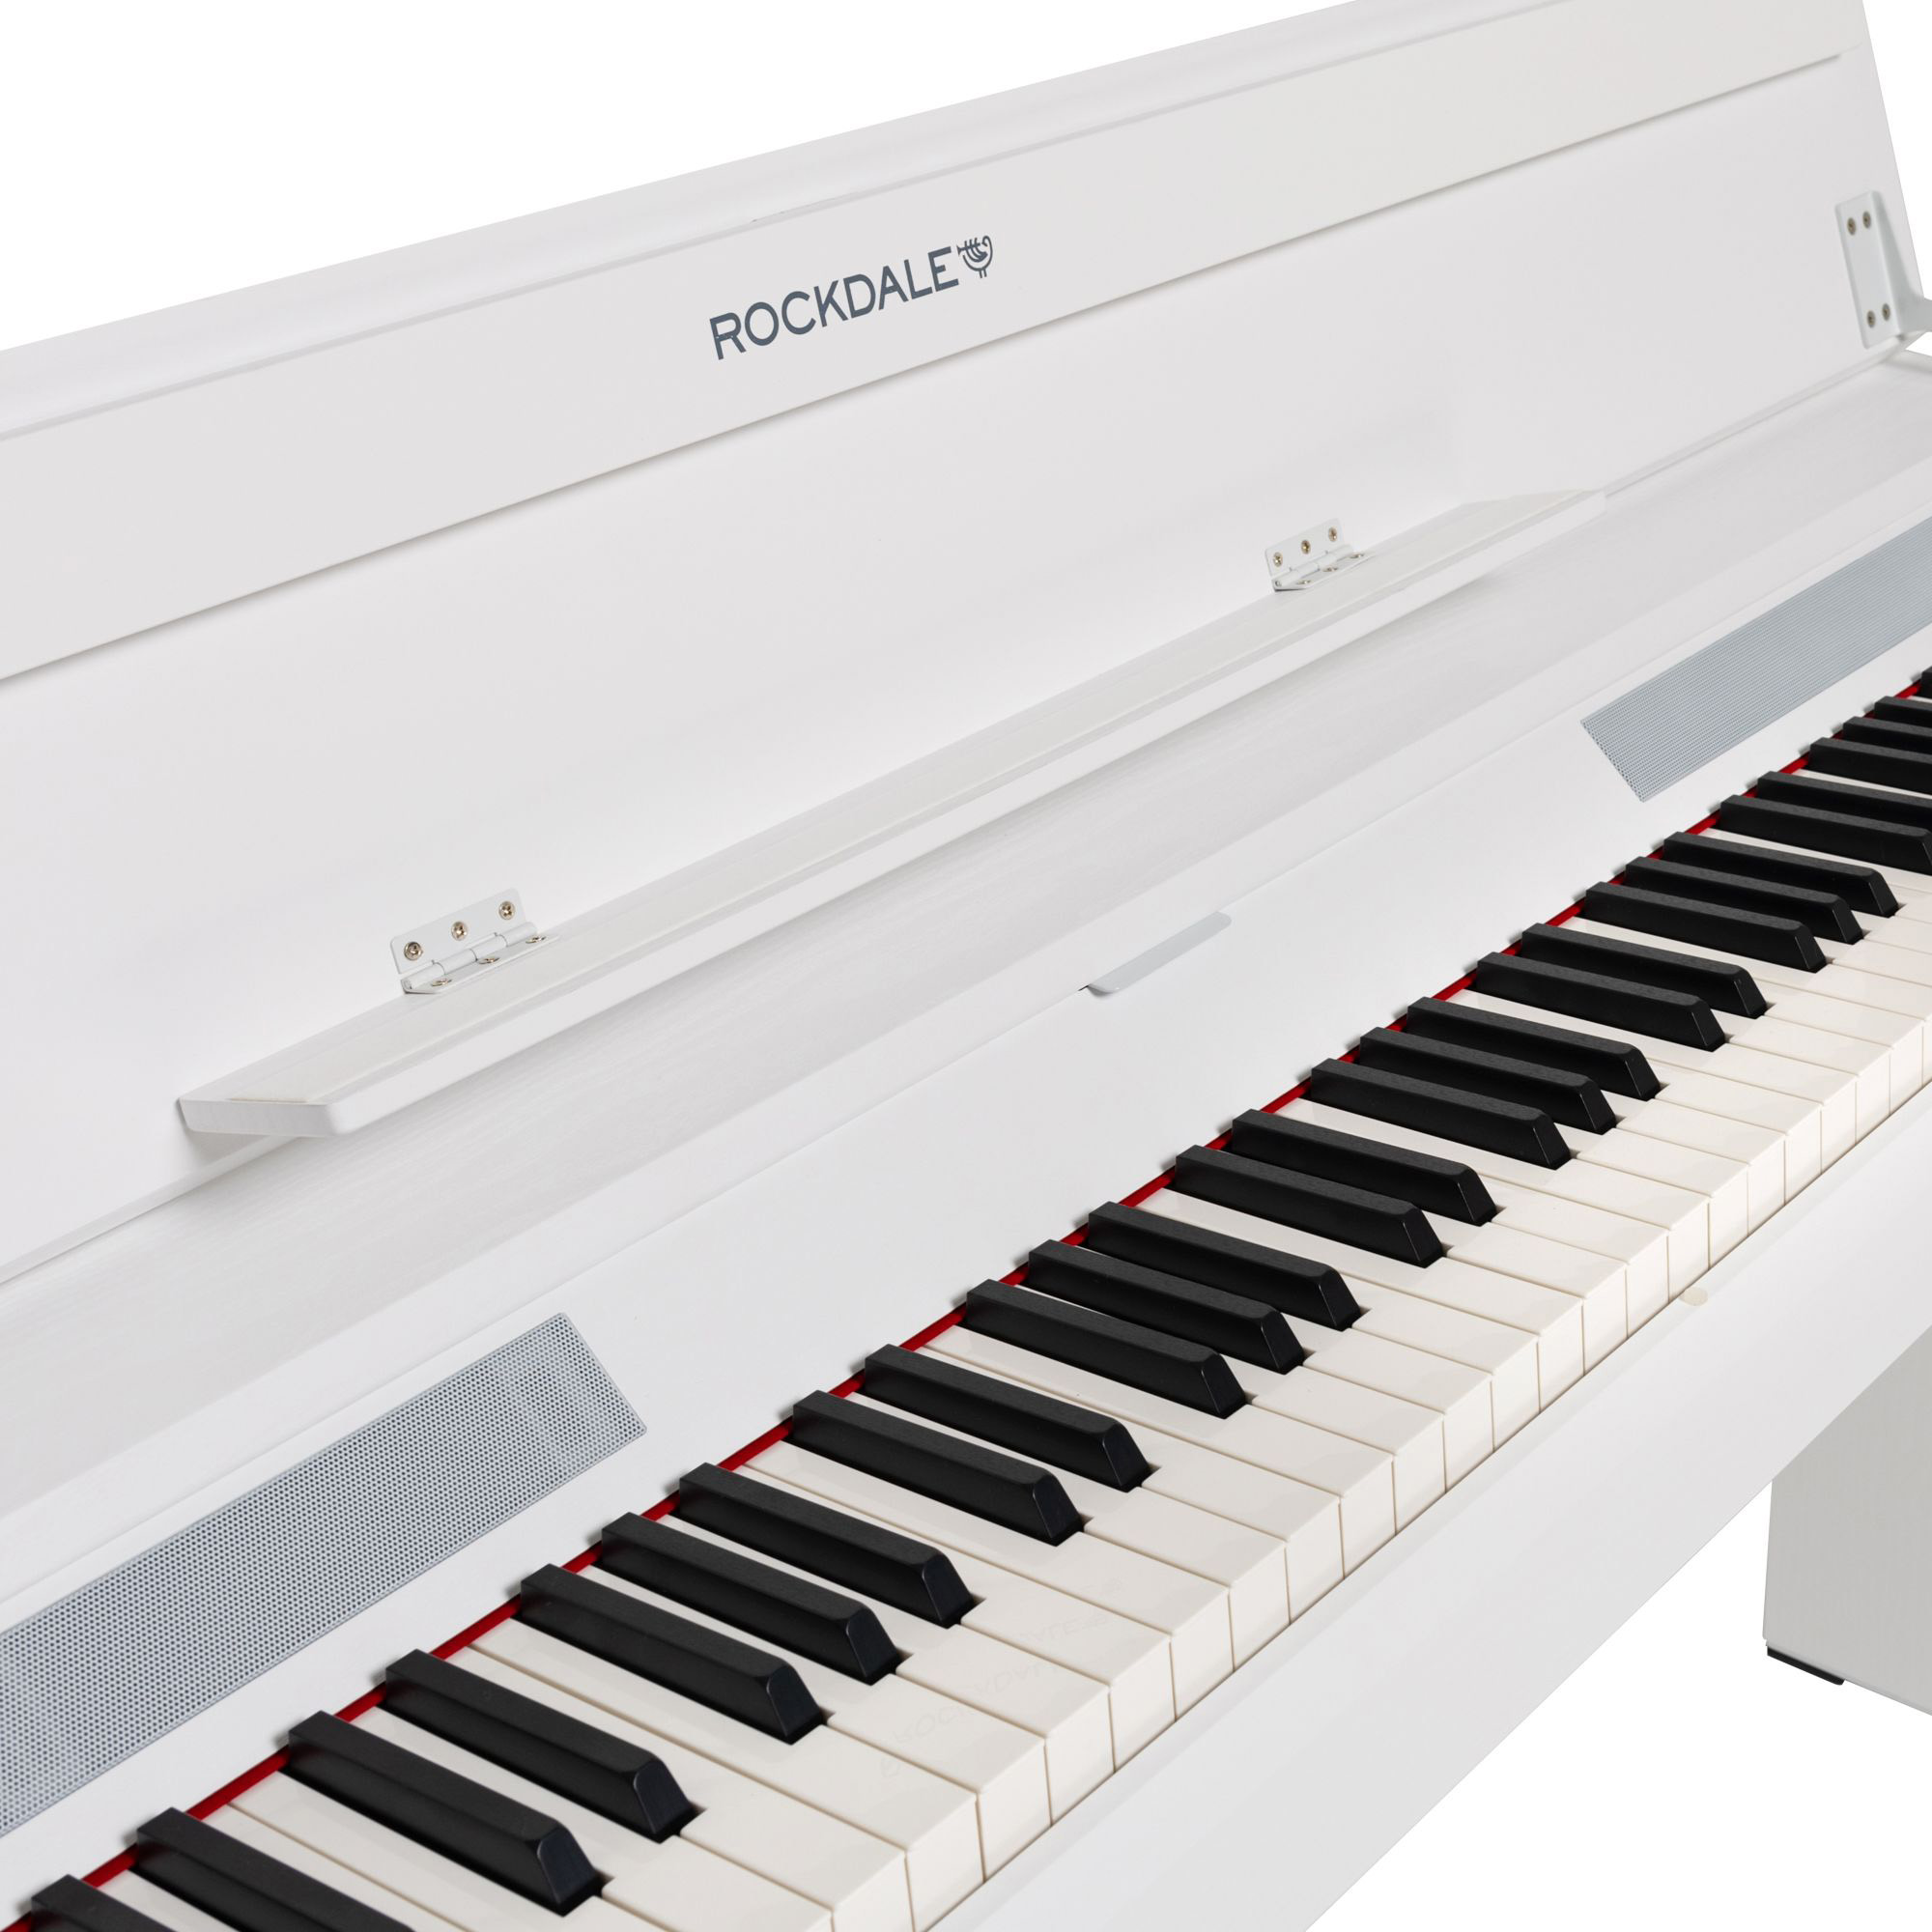 Rockdale Virtuoso White Цифровые пианино